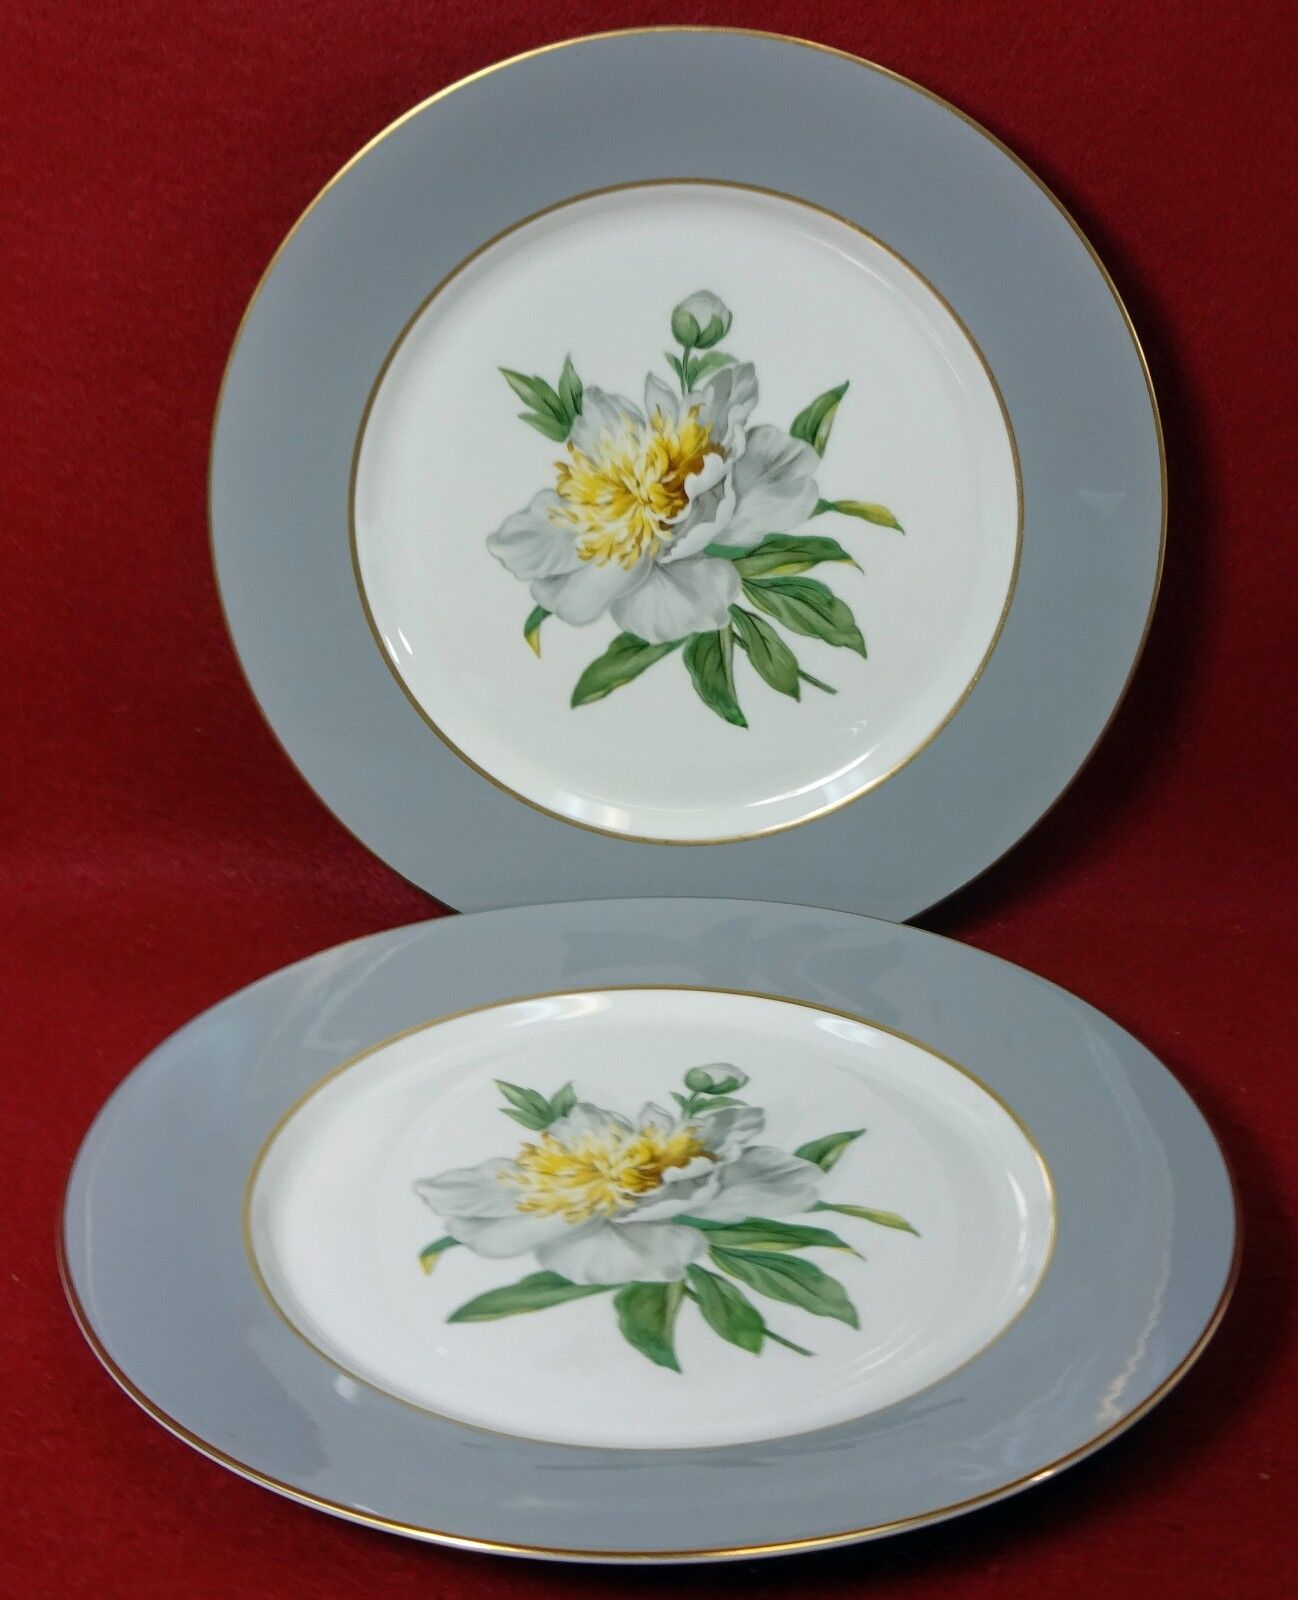 PRINCESS china GOLDEN PEONY pattern Set of 2 Dinner Plates - 10-1/4" Princess Golden Peony